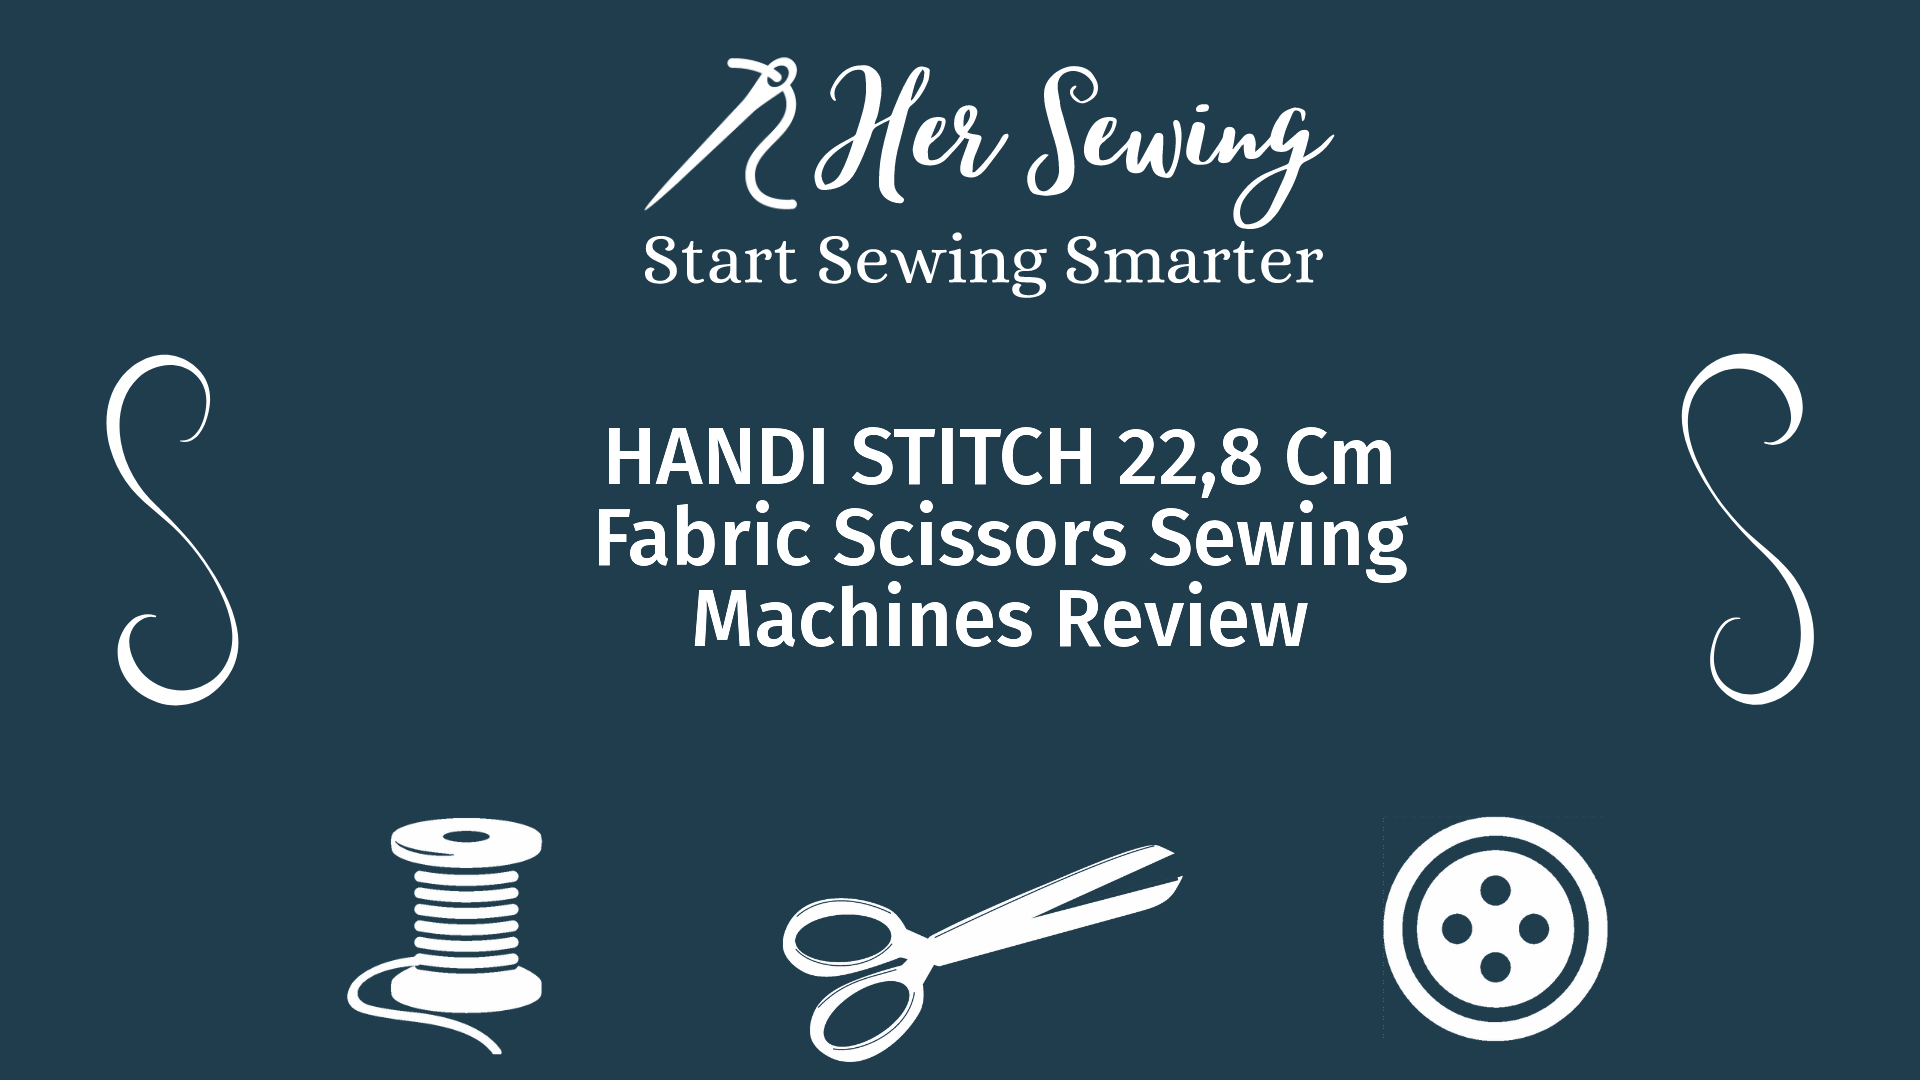 HANDI STITCH 22,8 Cm Fabric Scissors Sewing Machines Review